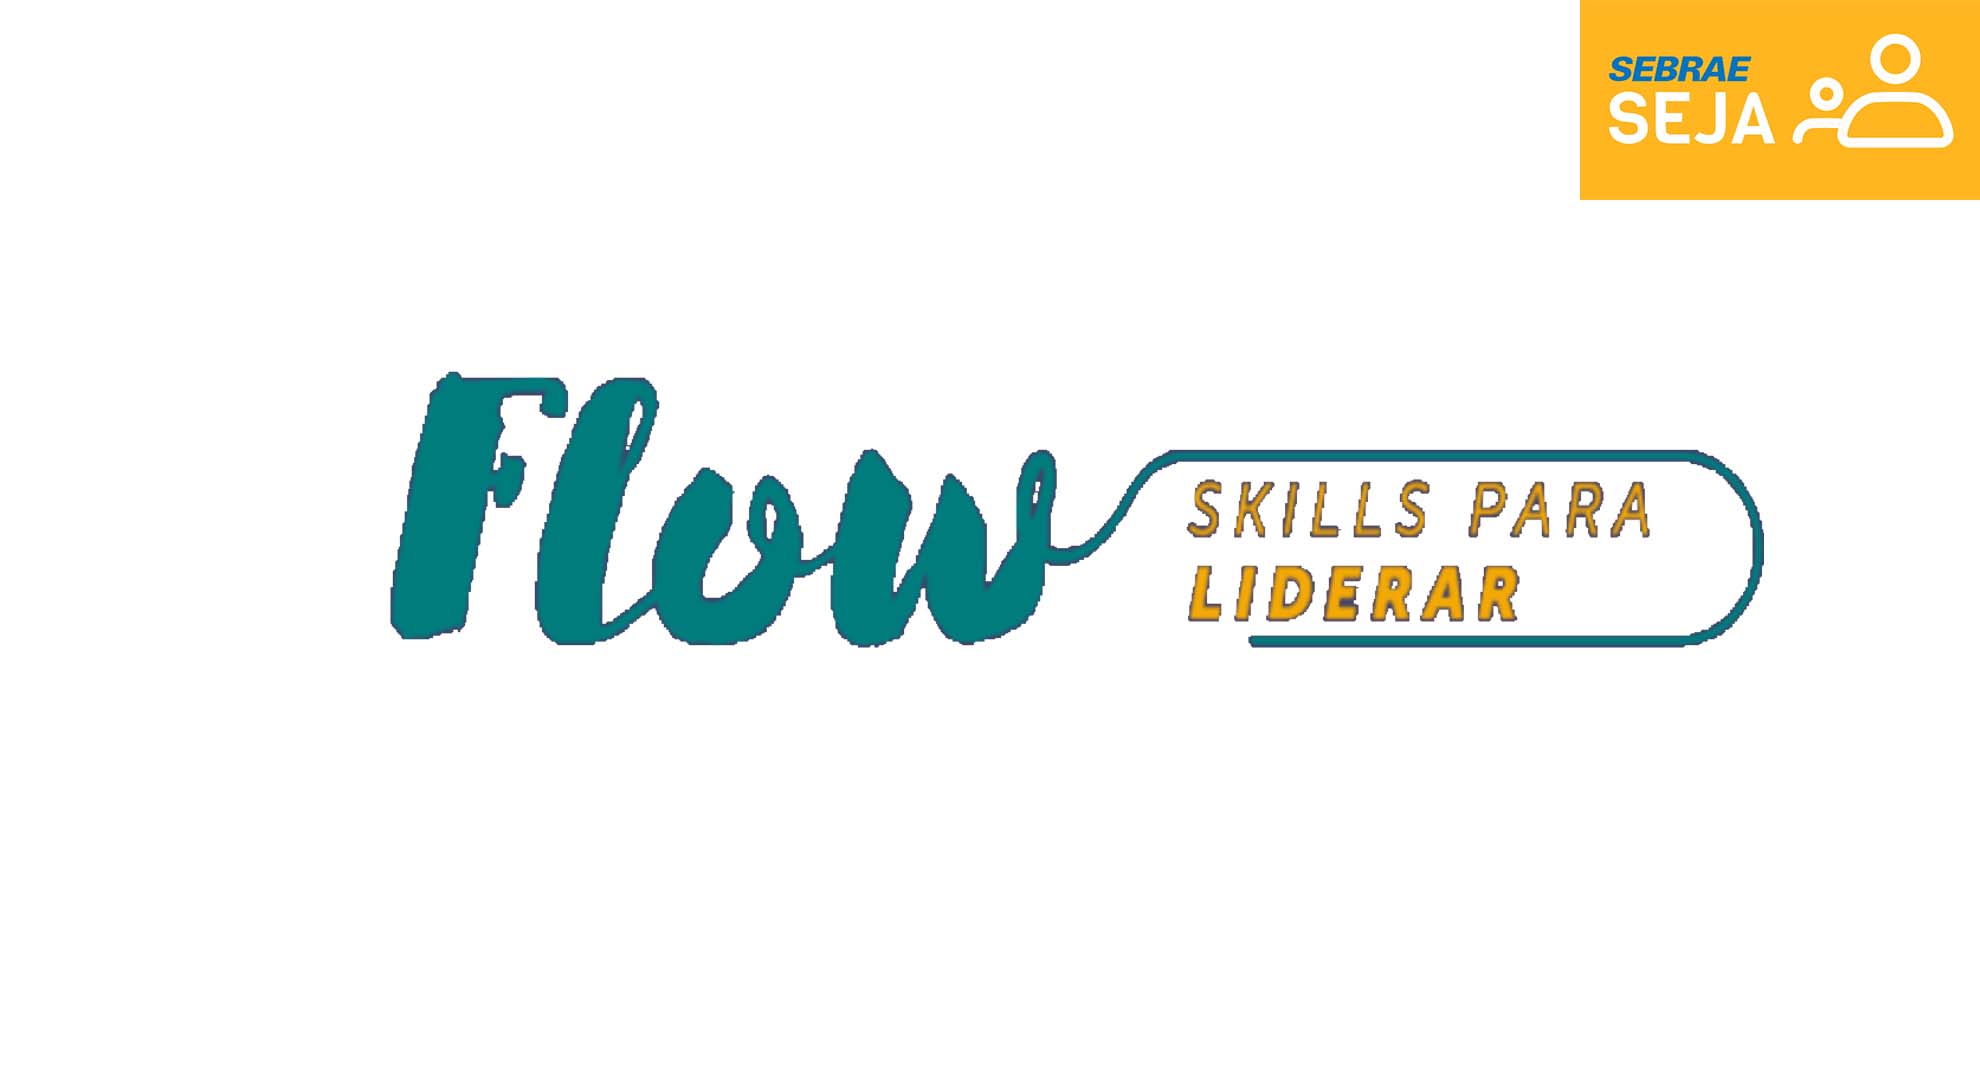 Curso Flow - Skills para liderar